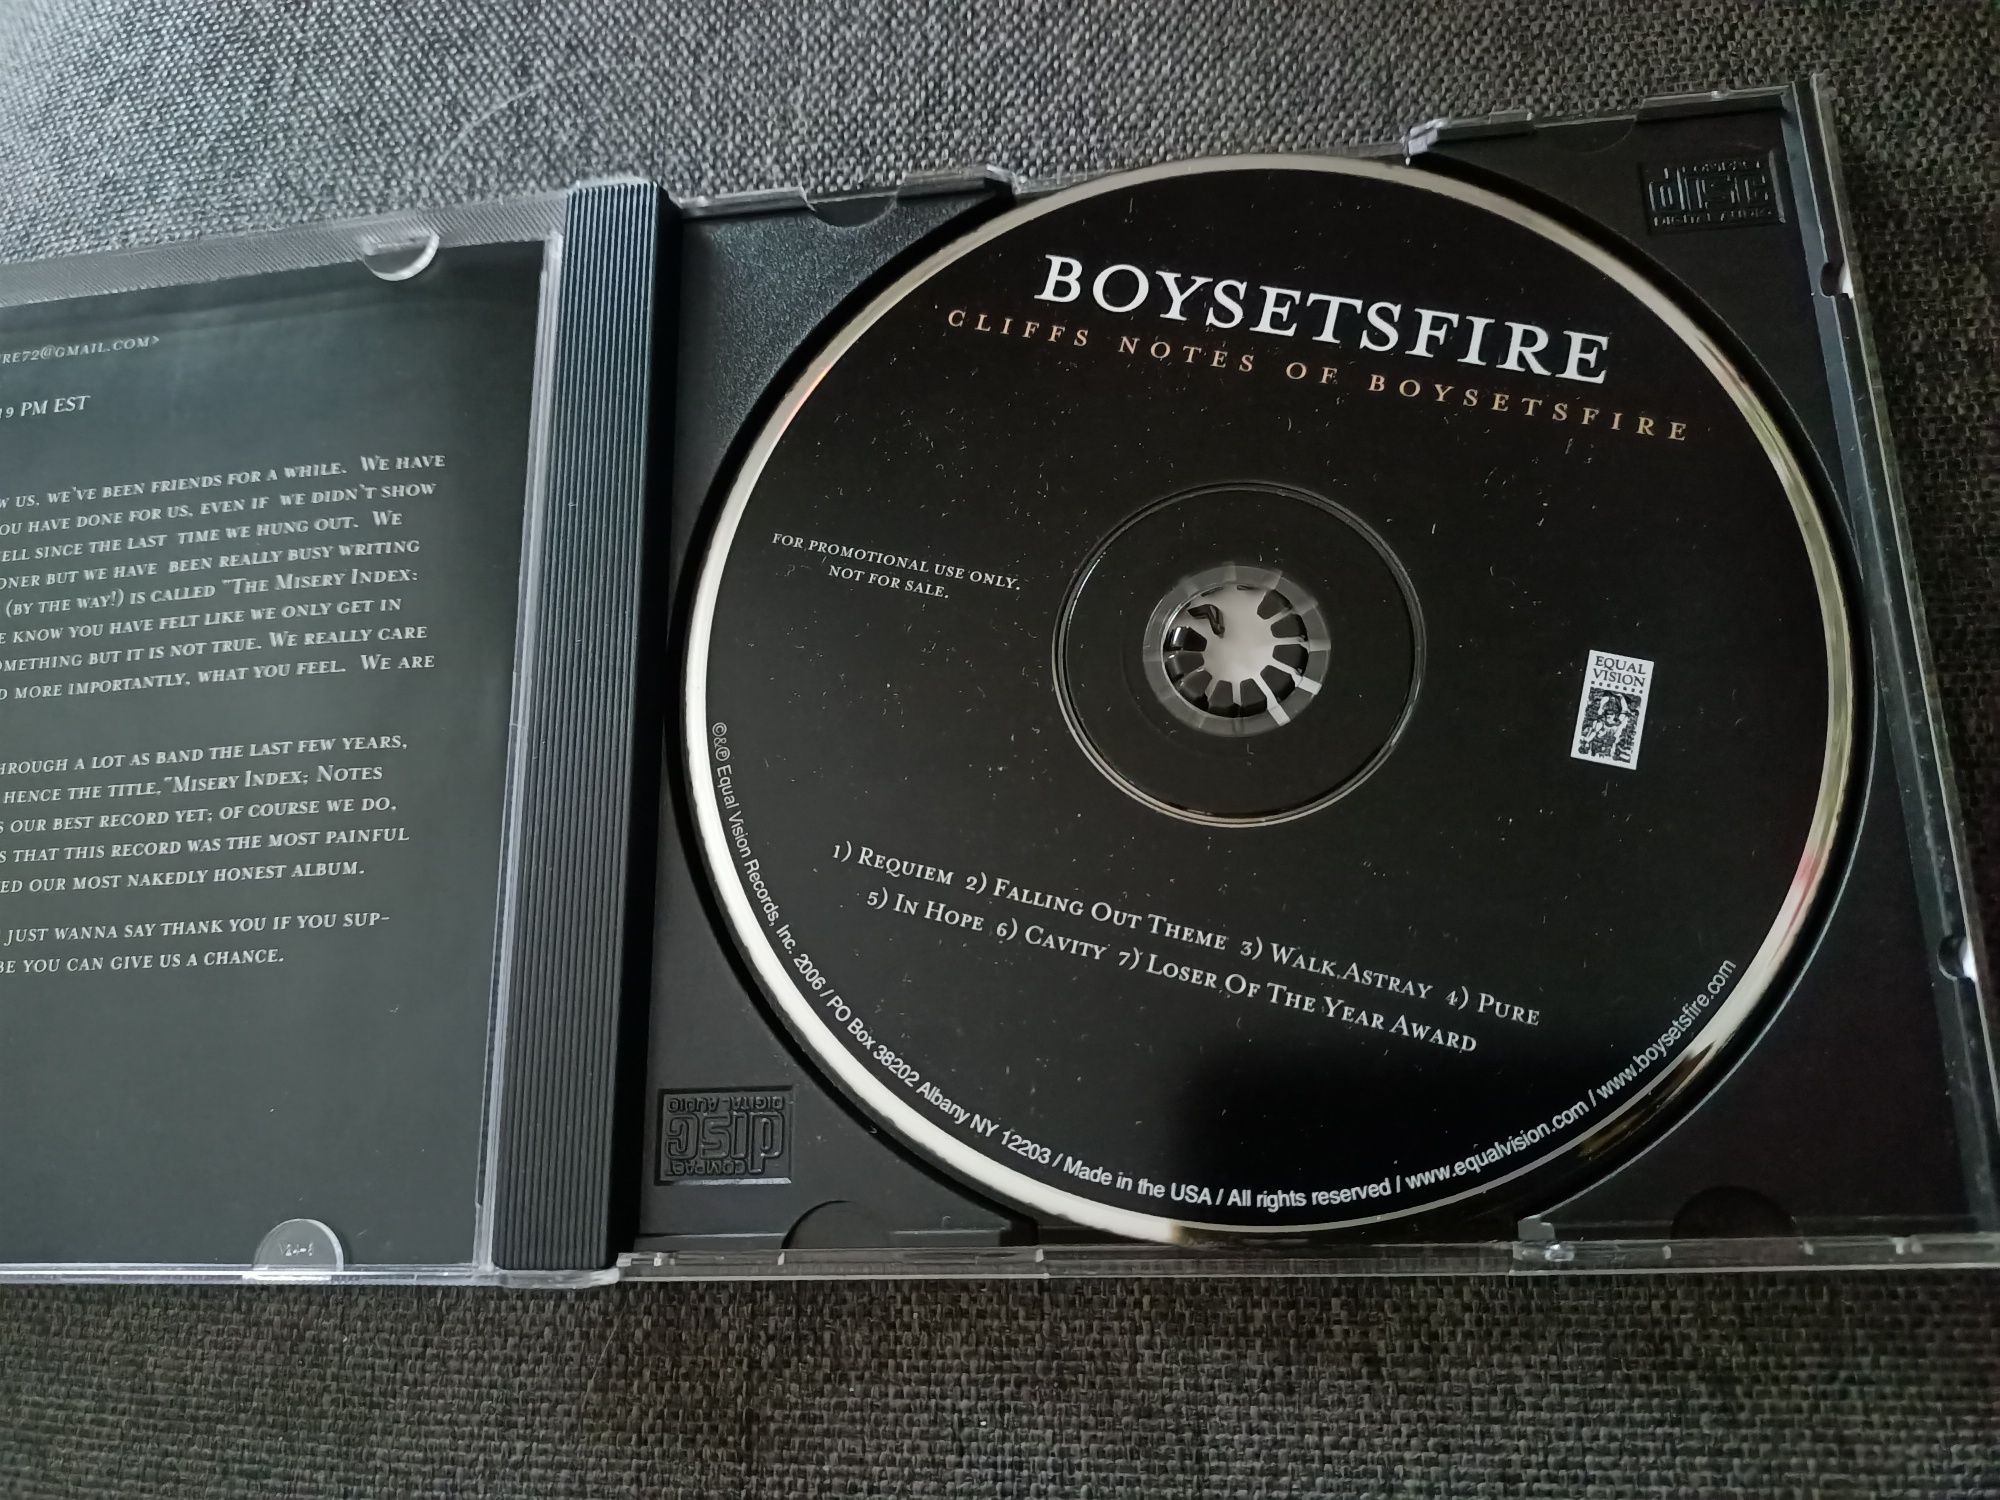 Boysetsfire - Cliffs Notes Of Boysetsfire (CD, Promo, Smplr)(vg+)